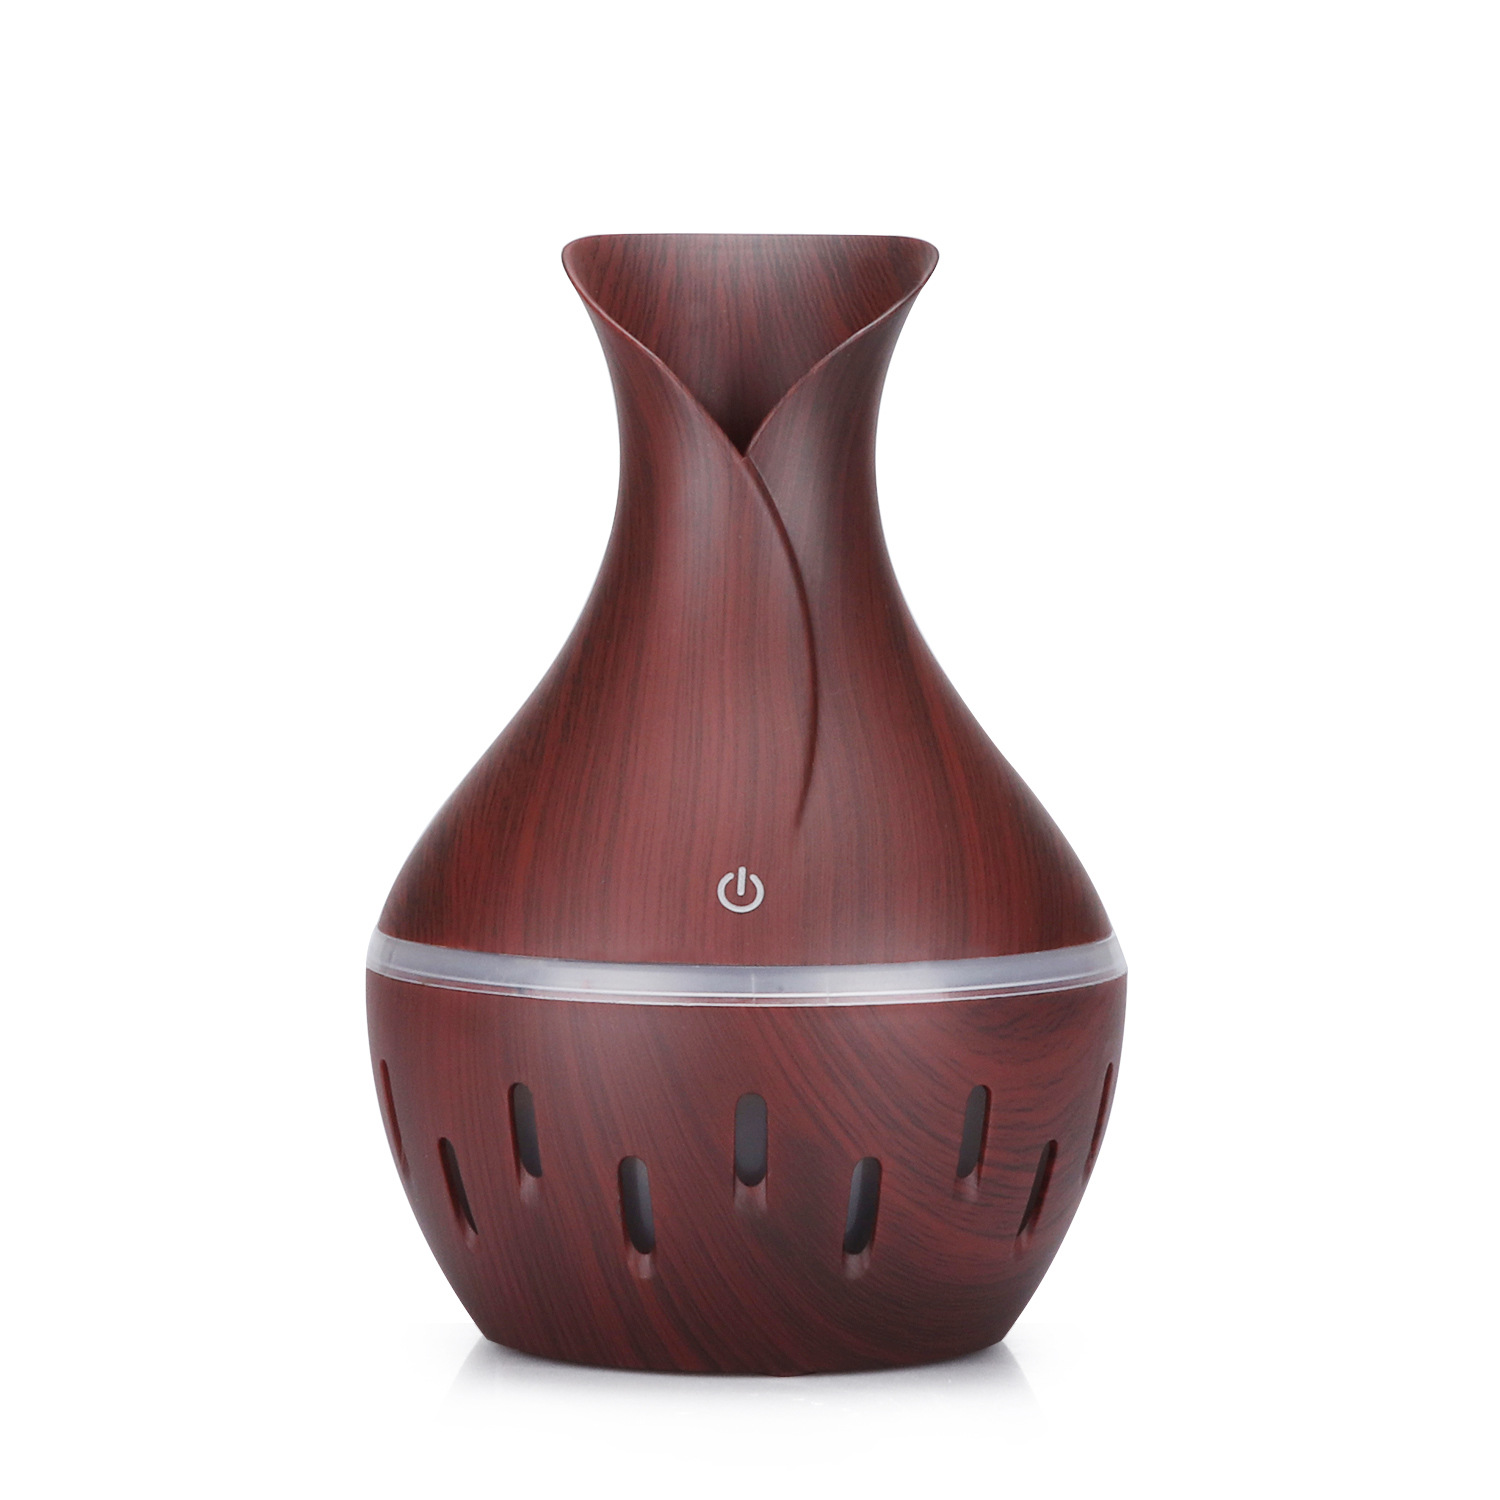 Wood Grain Aroma Essential Oil Diffuser Cool Mist 300ml Humidifier